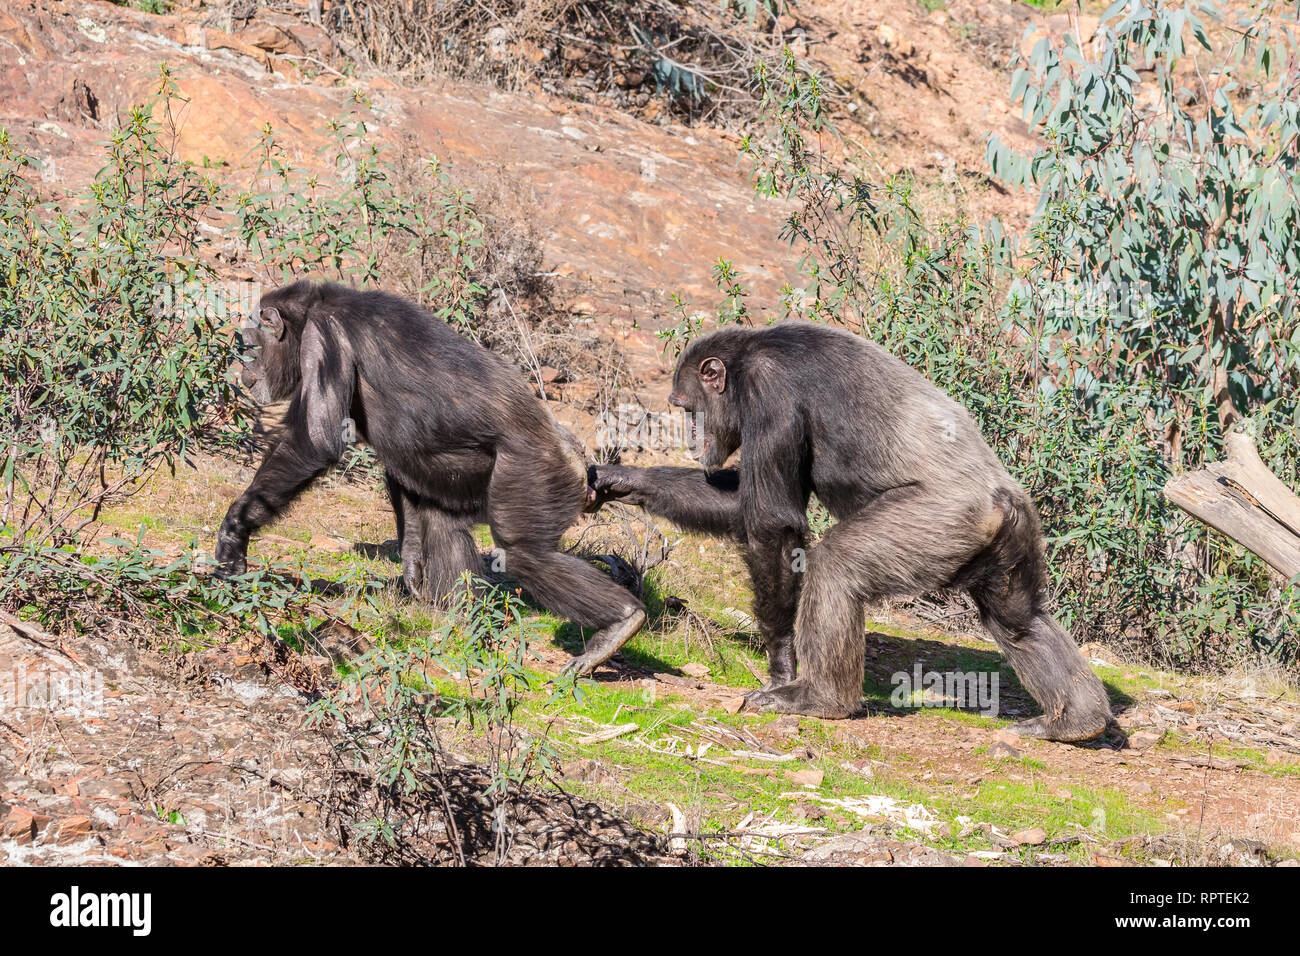 chimpanzee mating with human